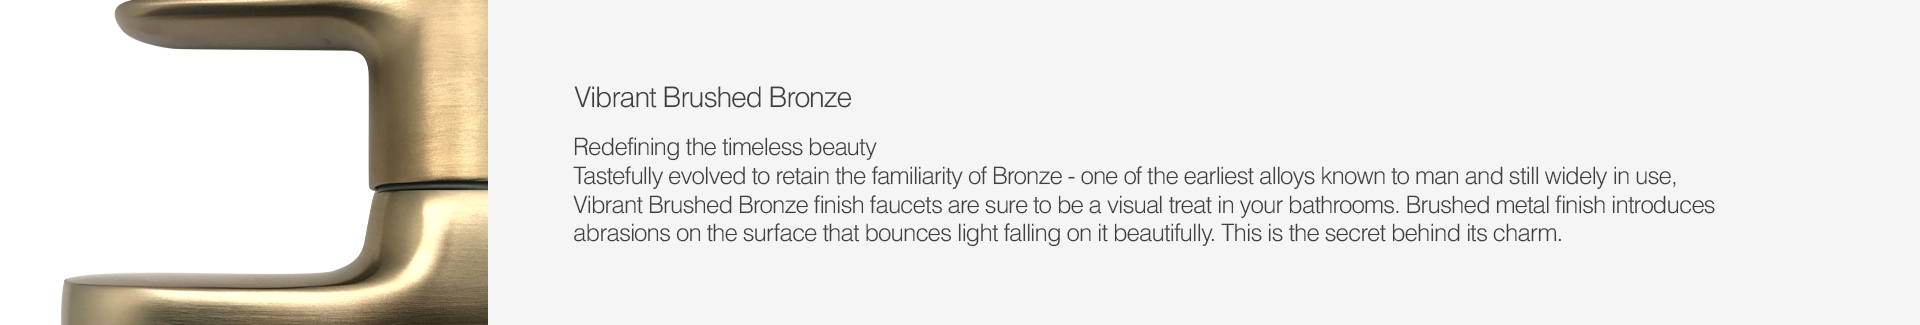 Vibrant Brushed Bronze-2